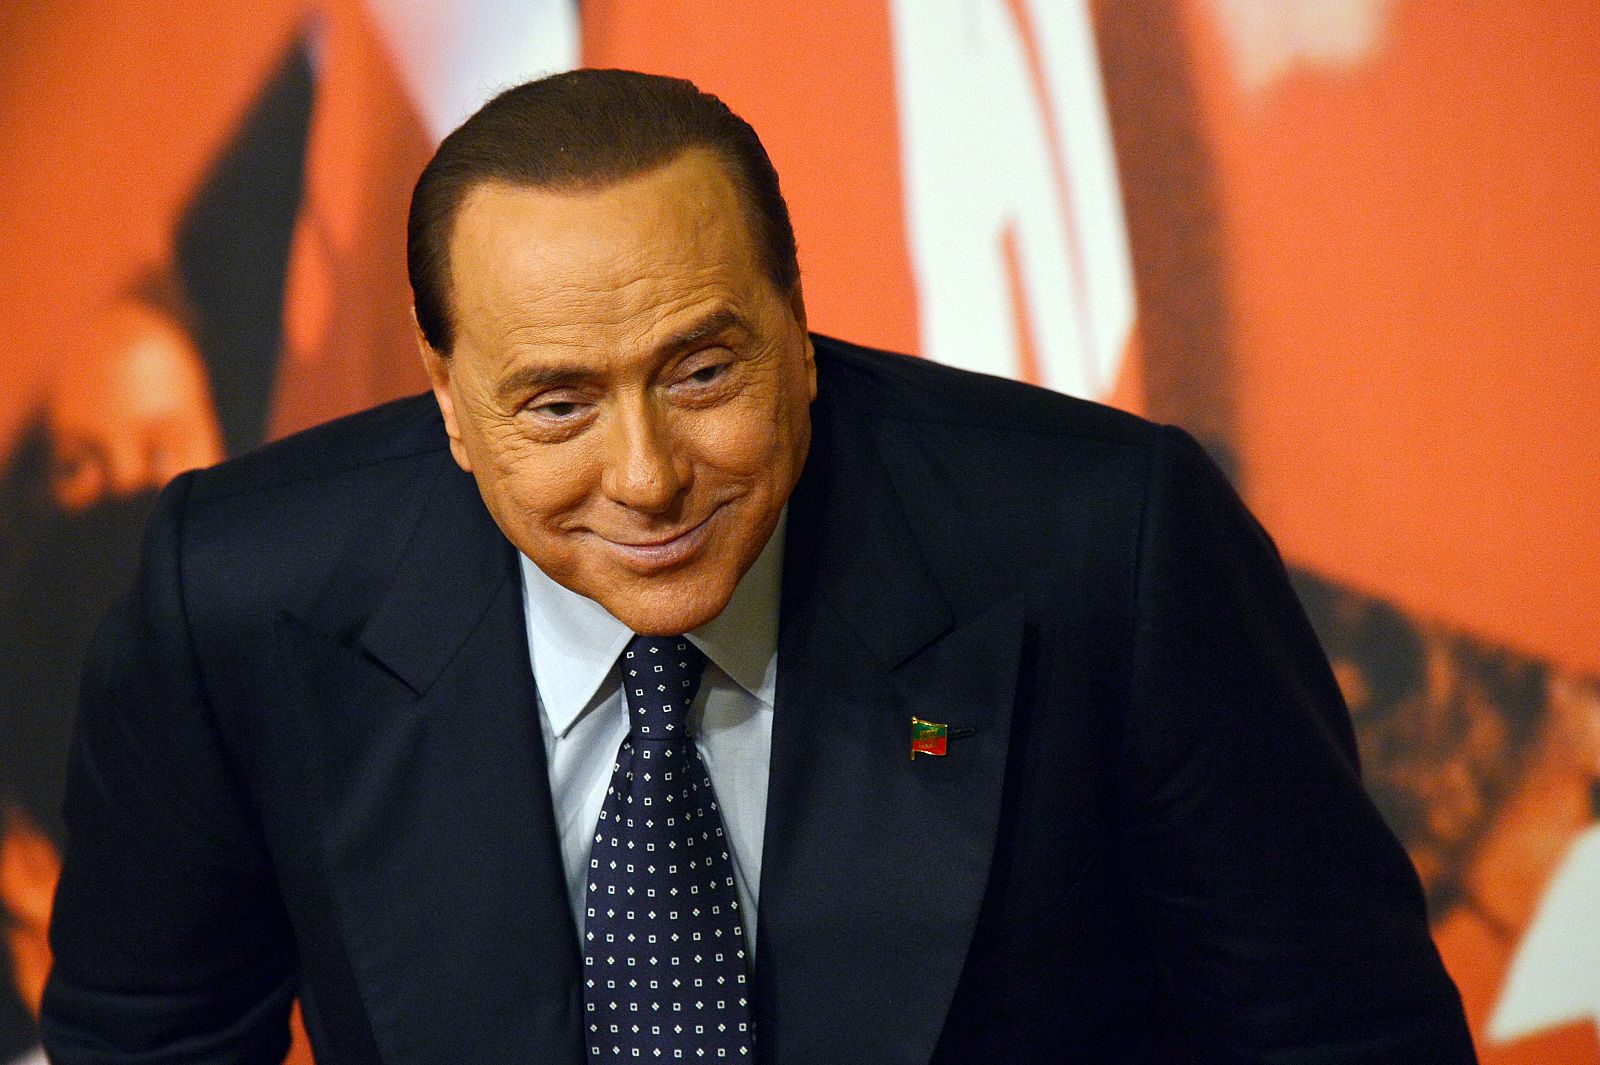 El ex primer ministro italiano, Silvio Berlusconi, durante una rueda de prensa celebrada este lunes